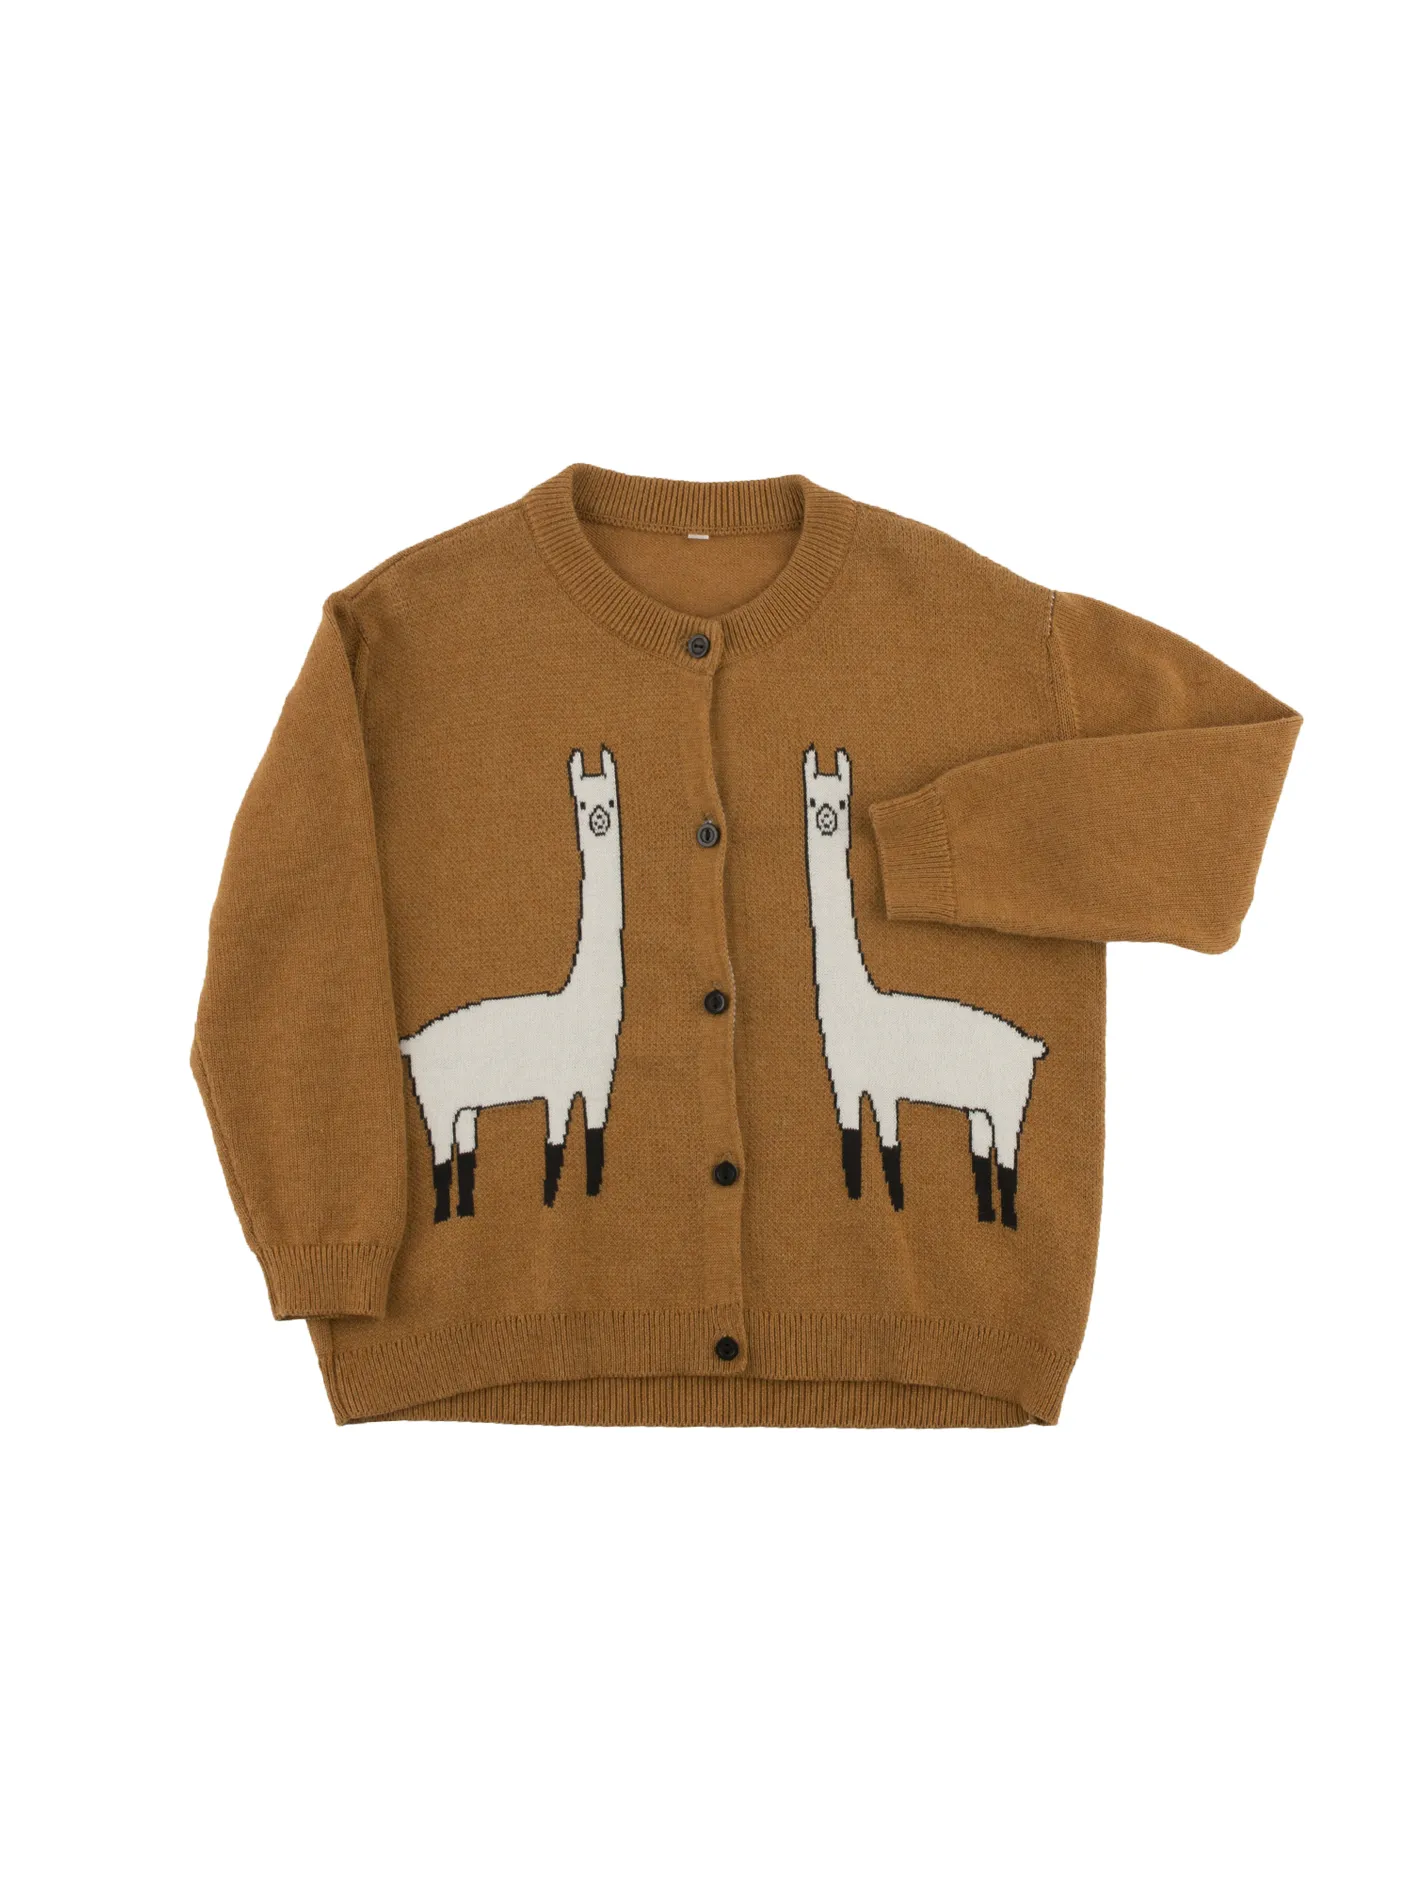 2017 New Selling Autumn Girls Fashion Knitted Cardigan Sweater Jacket Coats Kids Alpaca Printing Tiny Cotton Children39s Clothi4966642